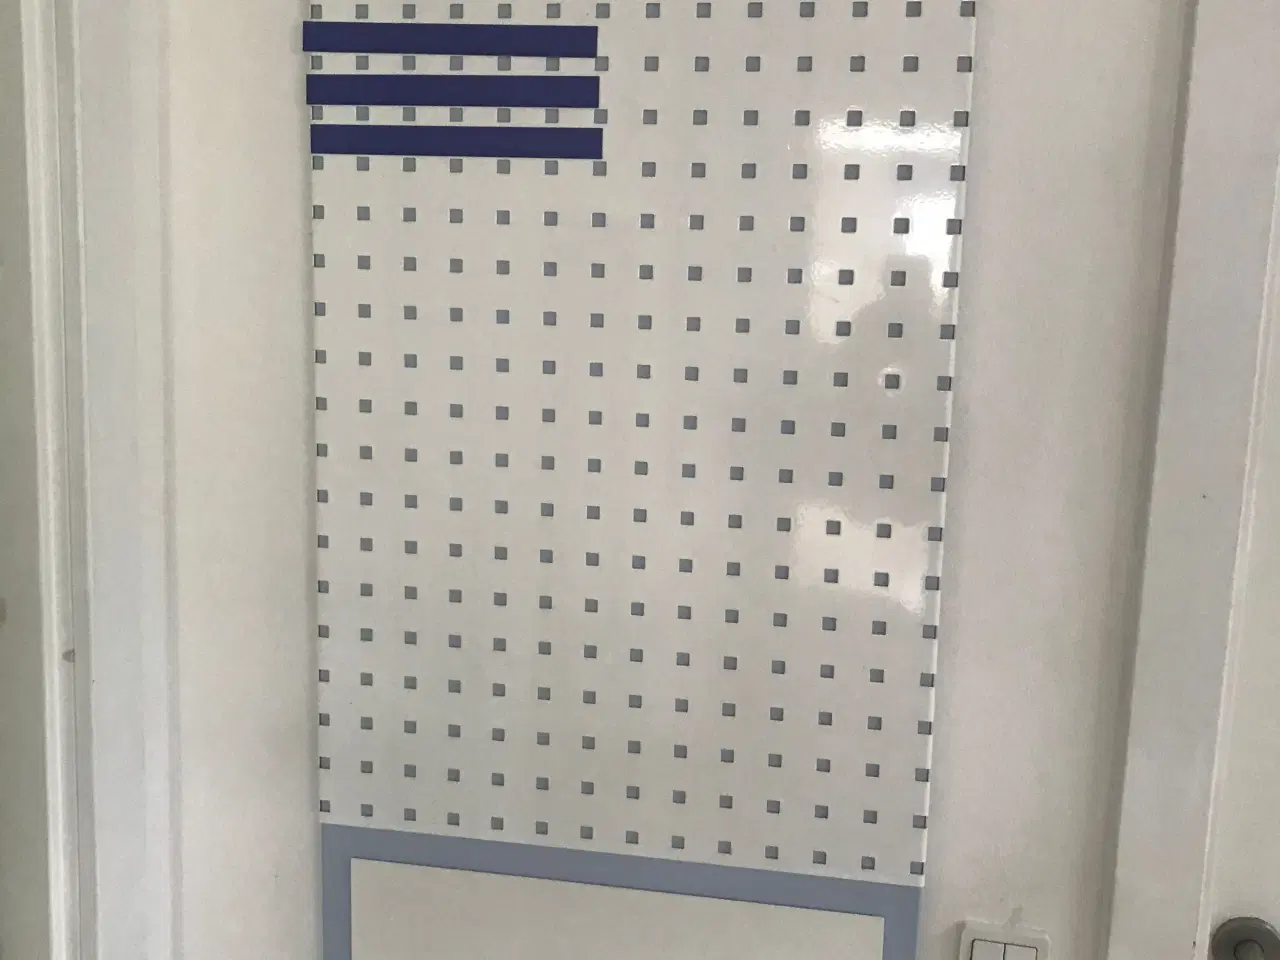 Billede 1 - Opslagstavle magnettavle whiteboard